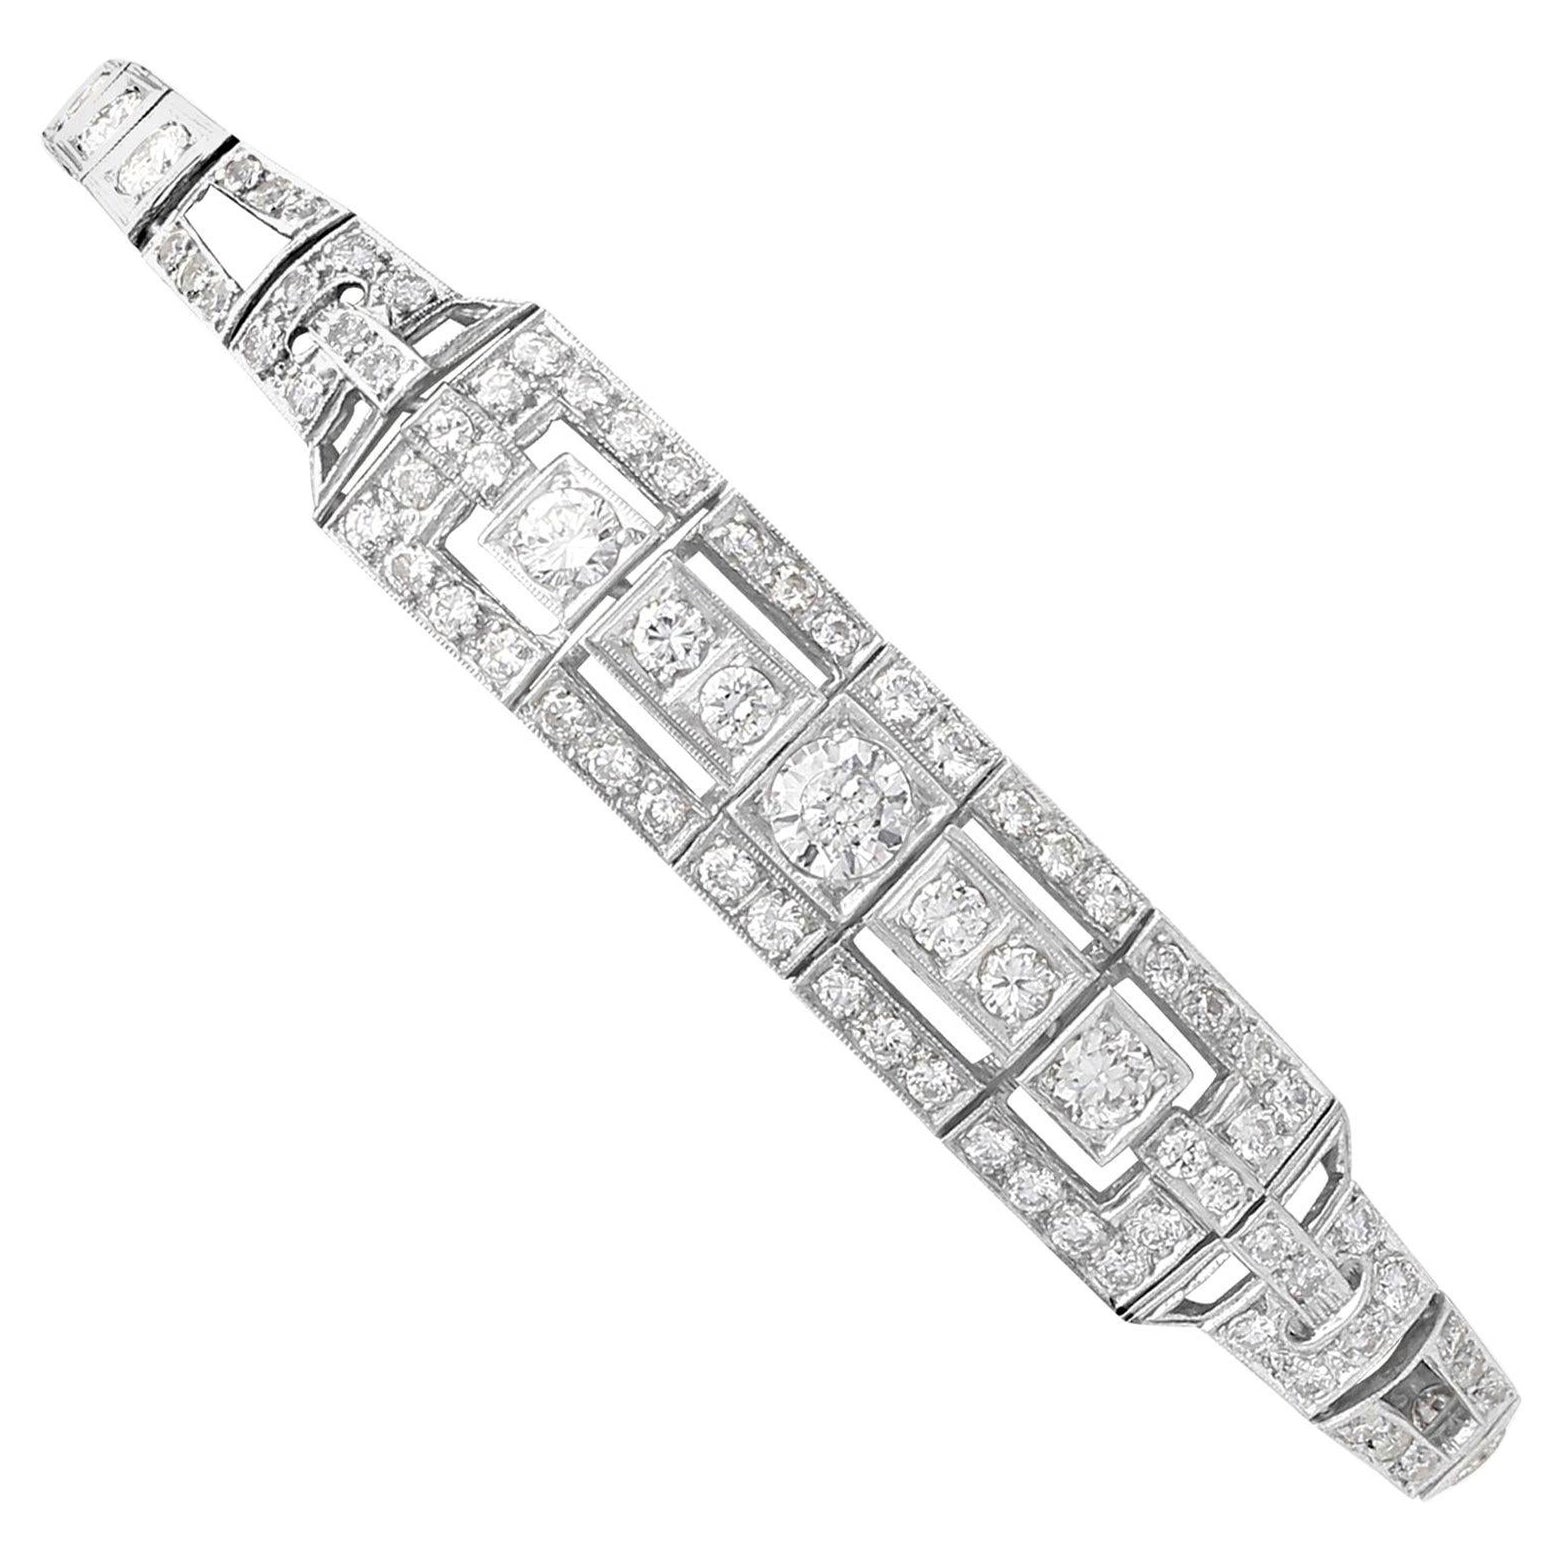 1930s Antique 4.46 Carat Diamond and Platinum Bracelet For Sale